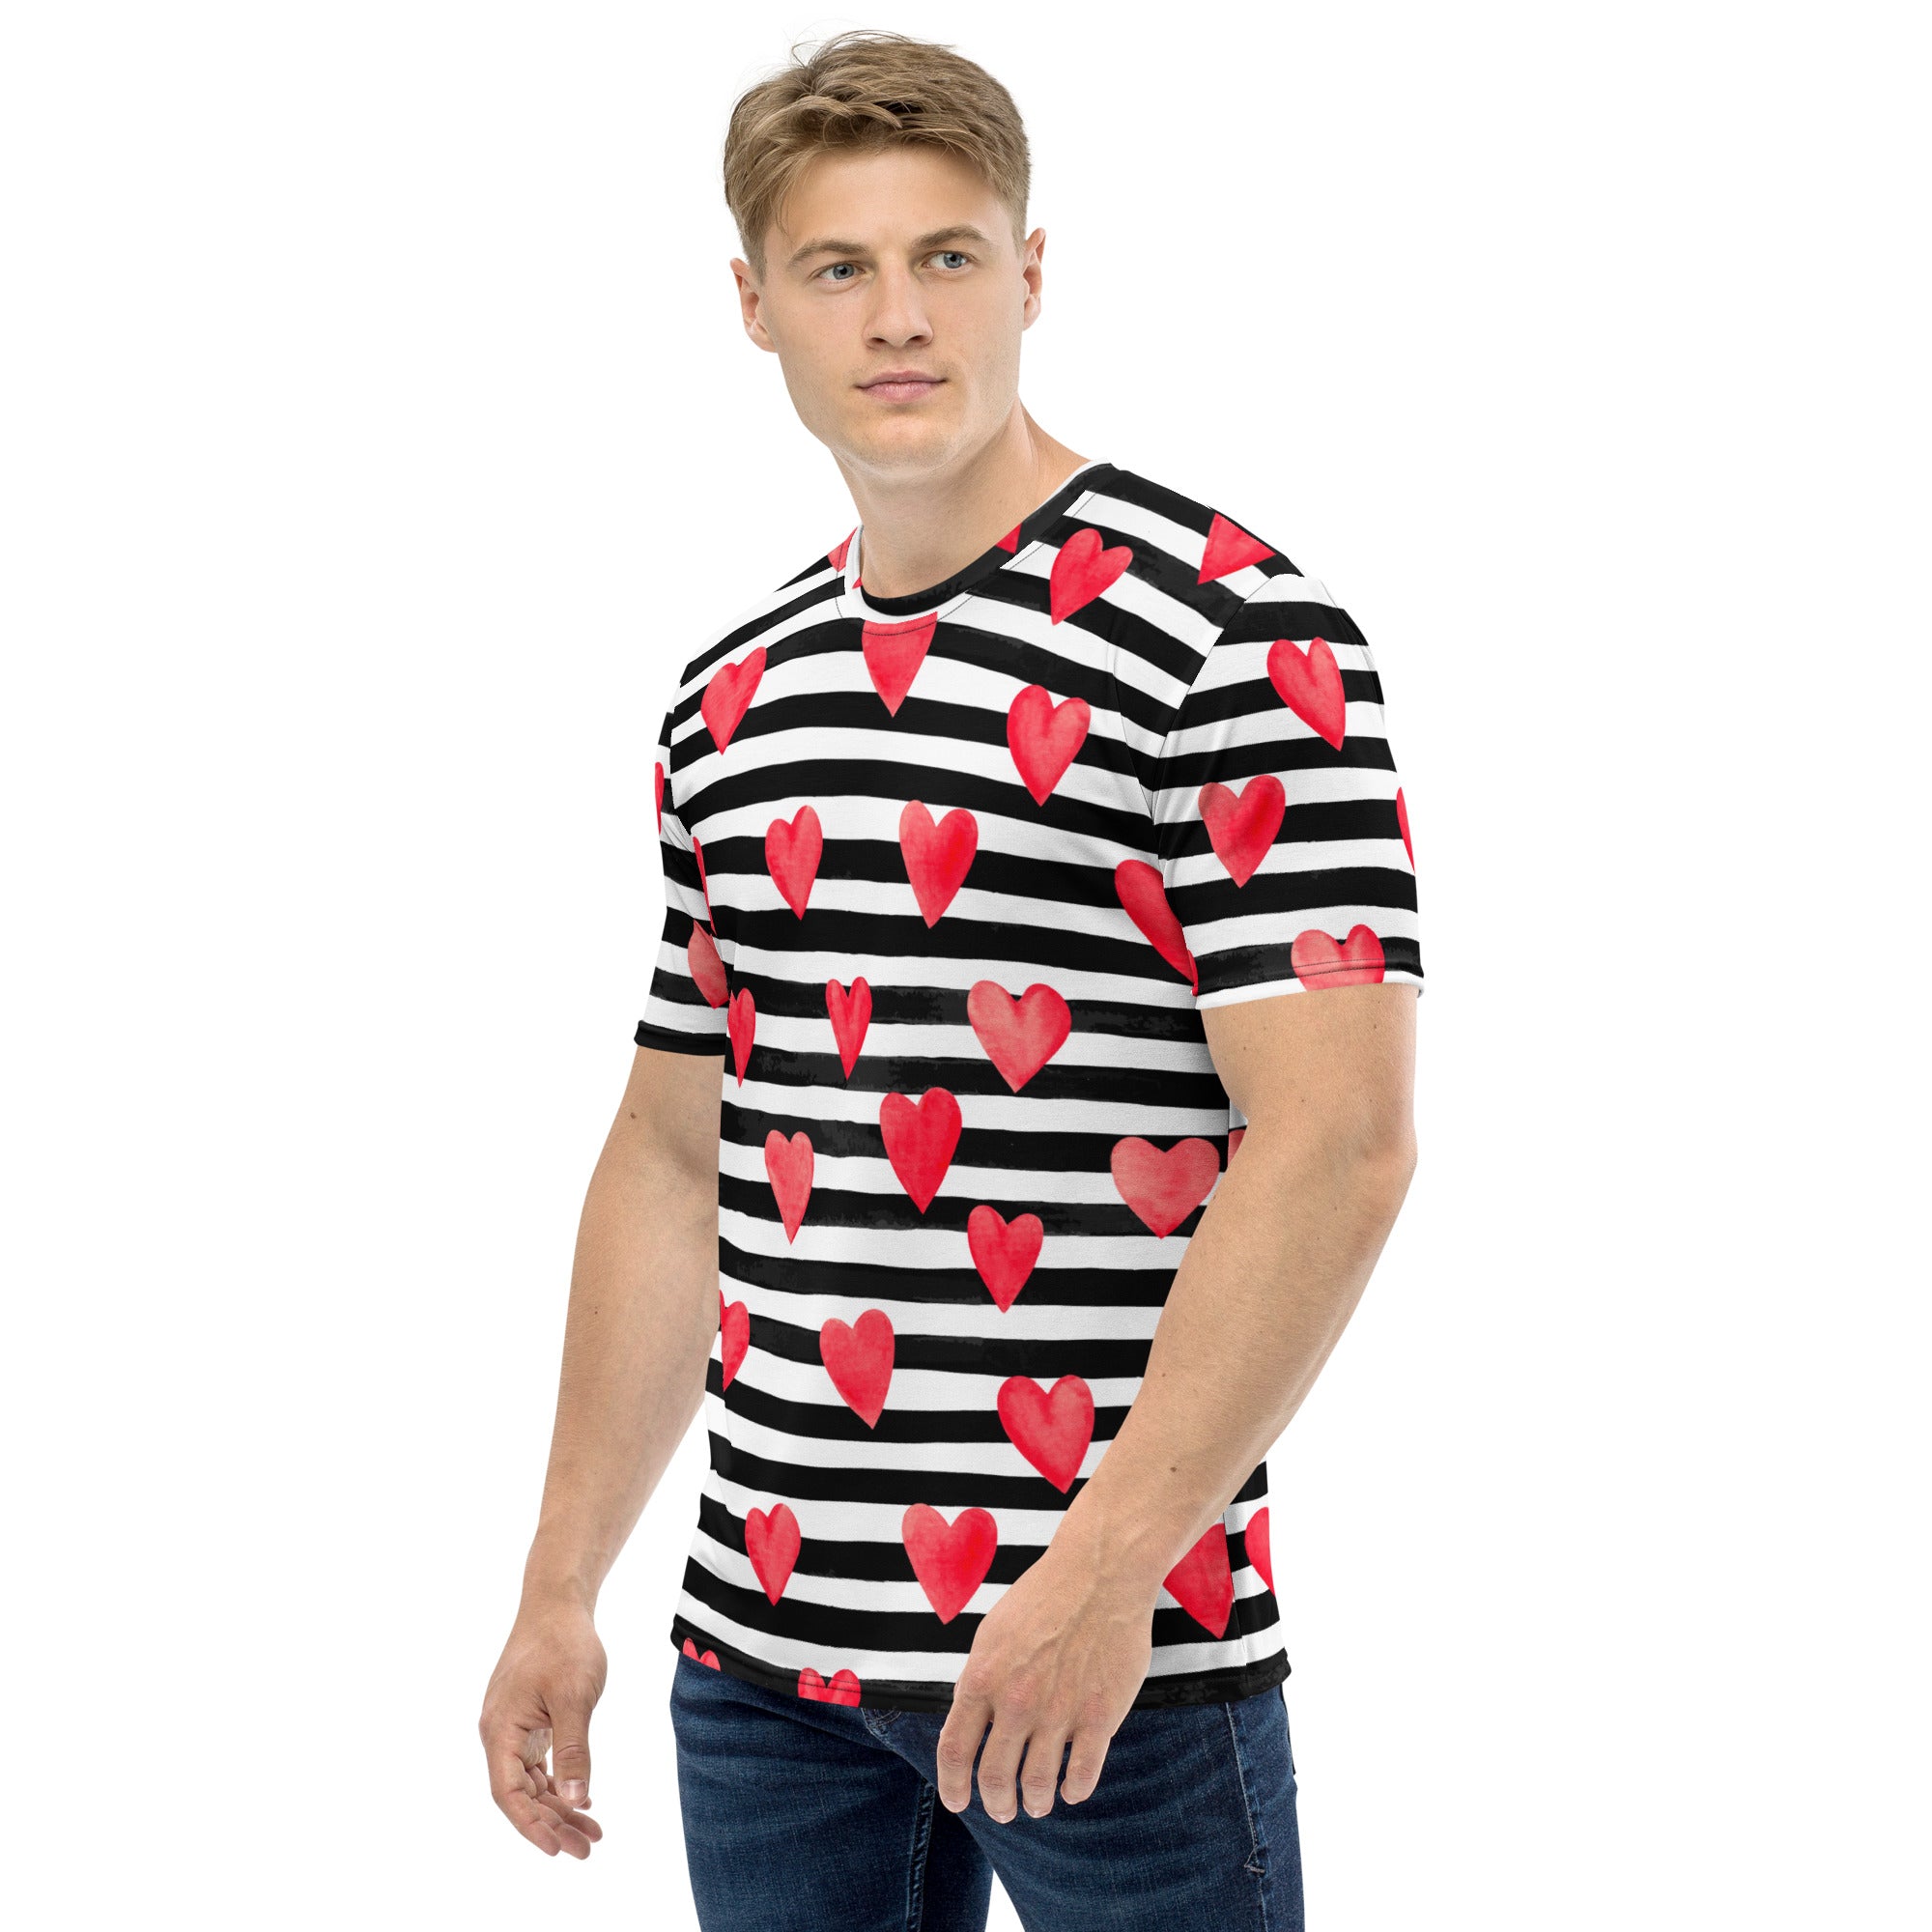 Stripes & Hearts Men's T-shirt